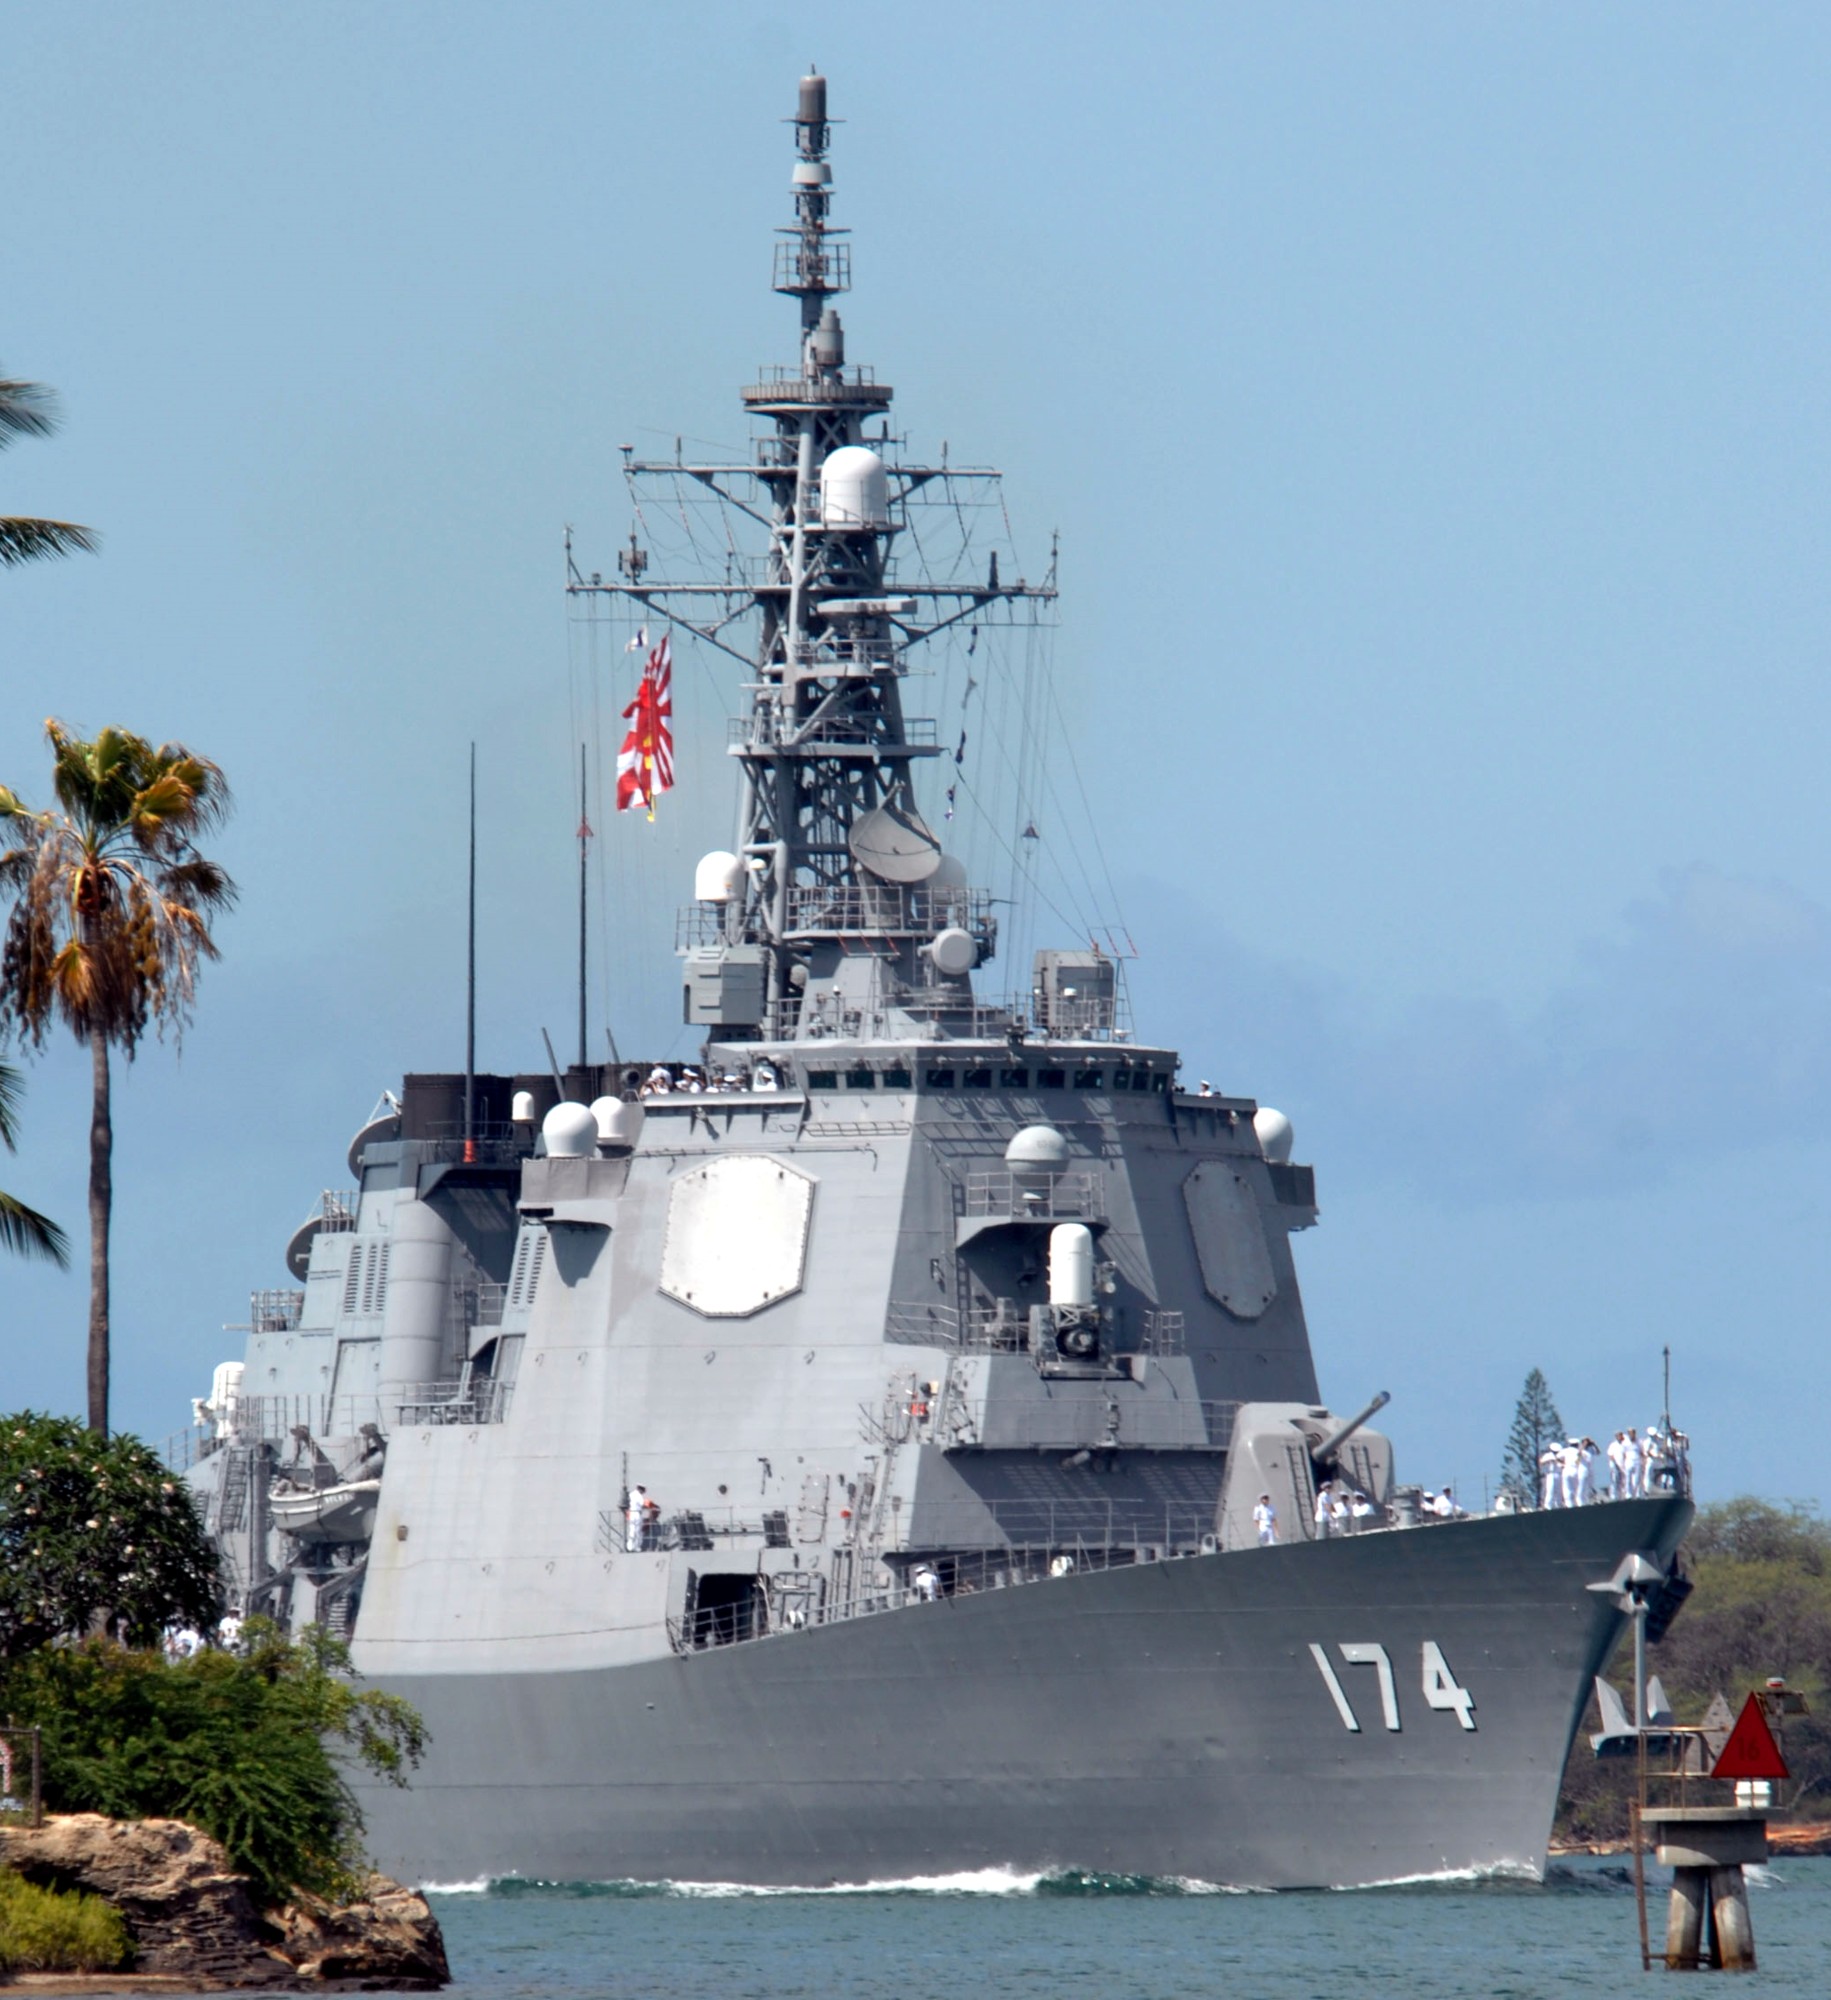 ddg-174 js kirishima kongo class guided missile destroyer aegis japan maritime self defense force jmsdf 26